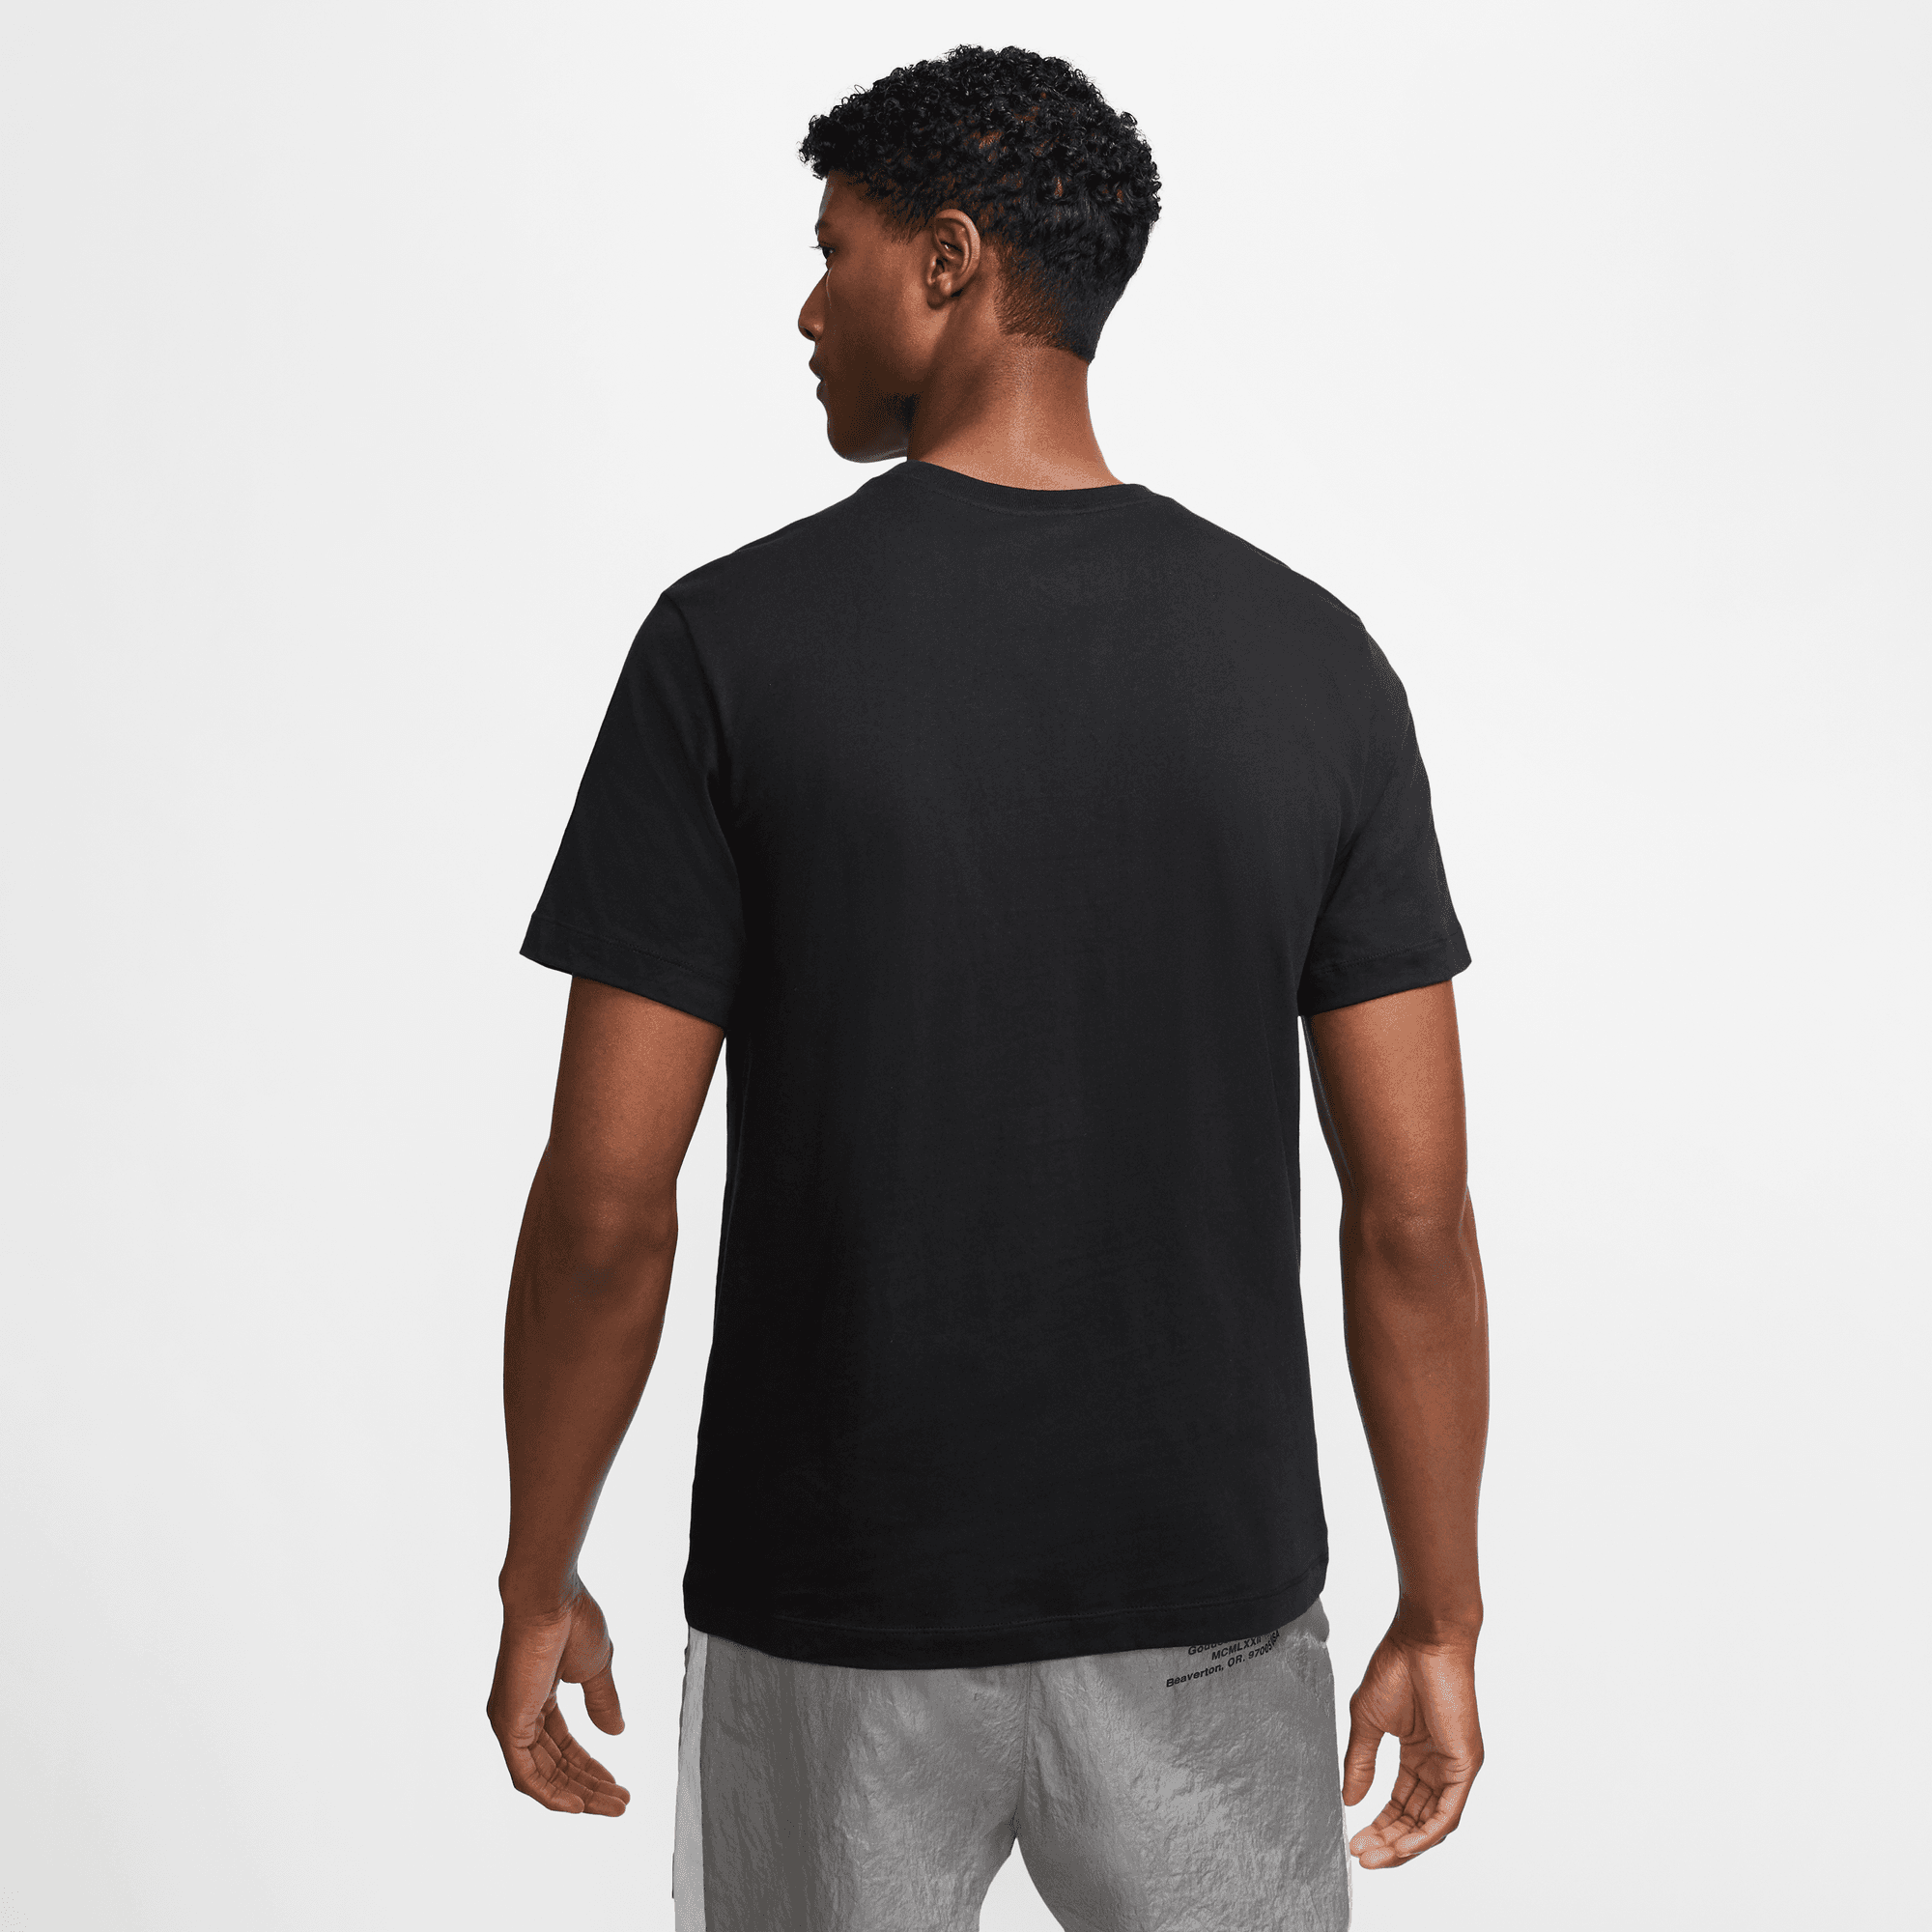 T-Shirt SoleFly - NSW Nike